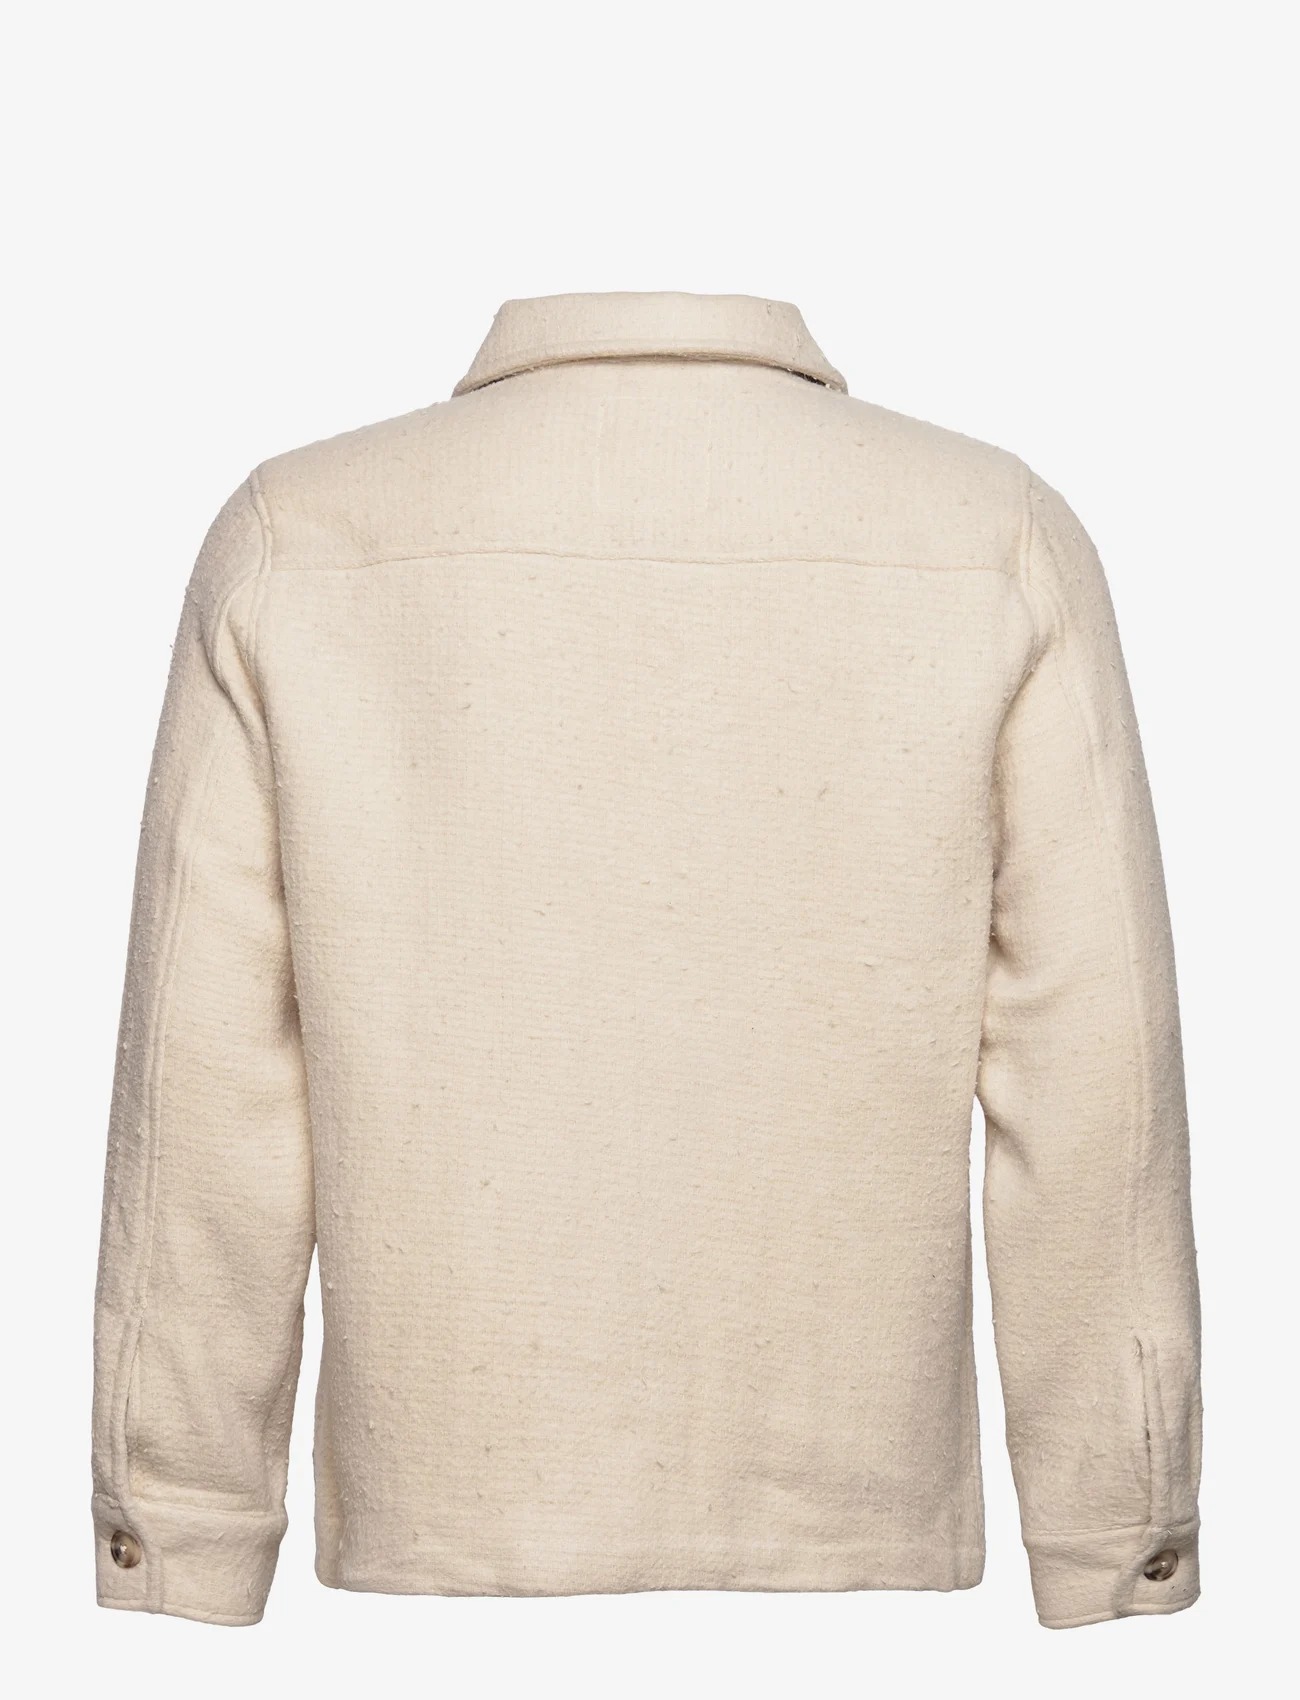 Lindbergh - Pile overshirt jacket - ulljackor - off white - 1